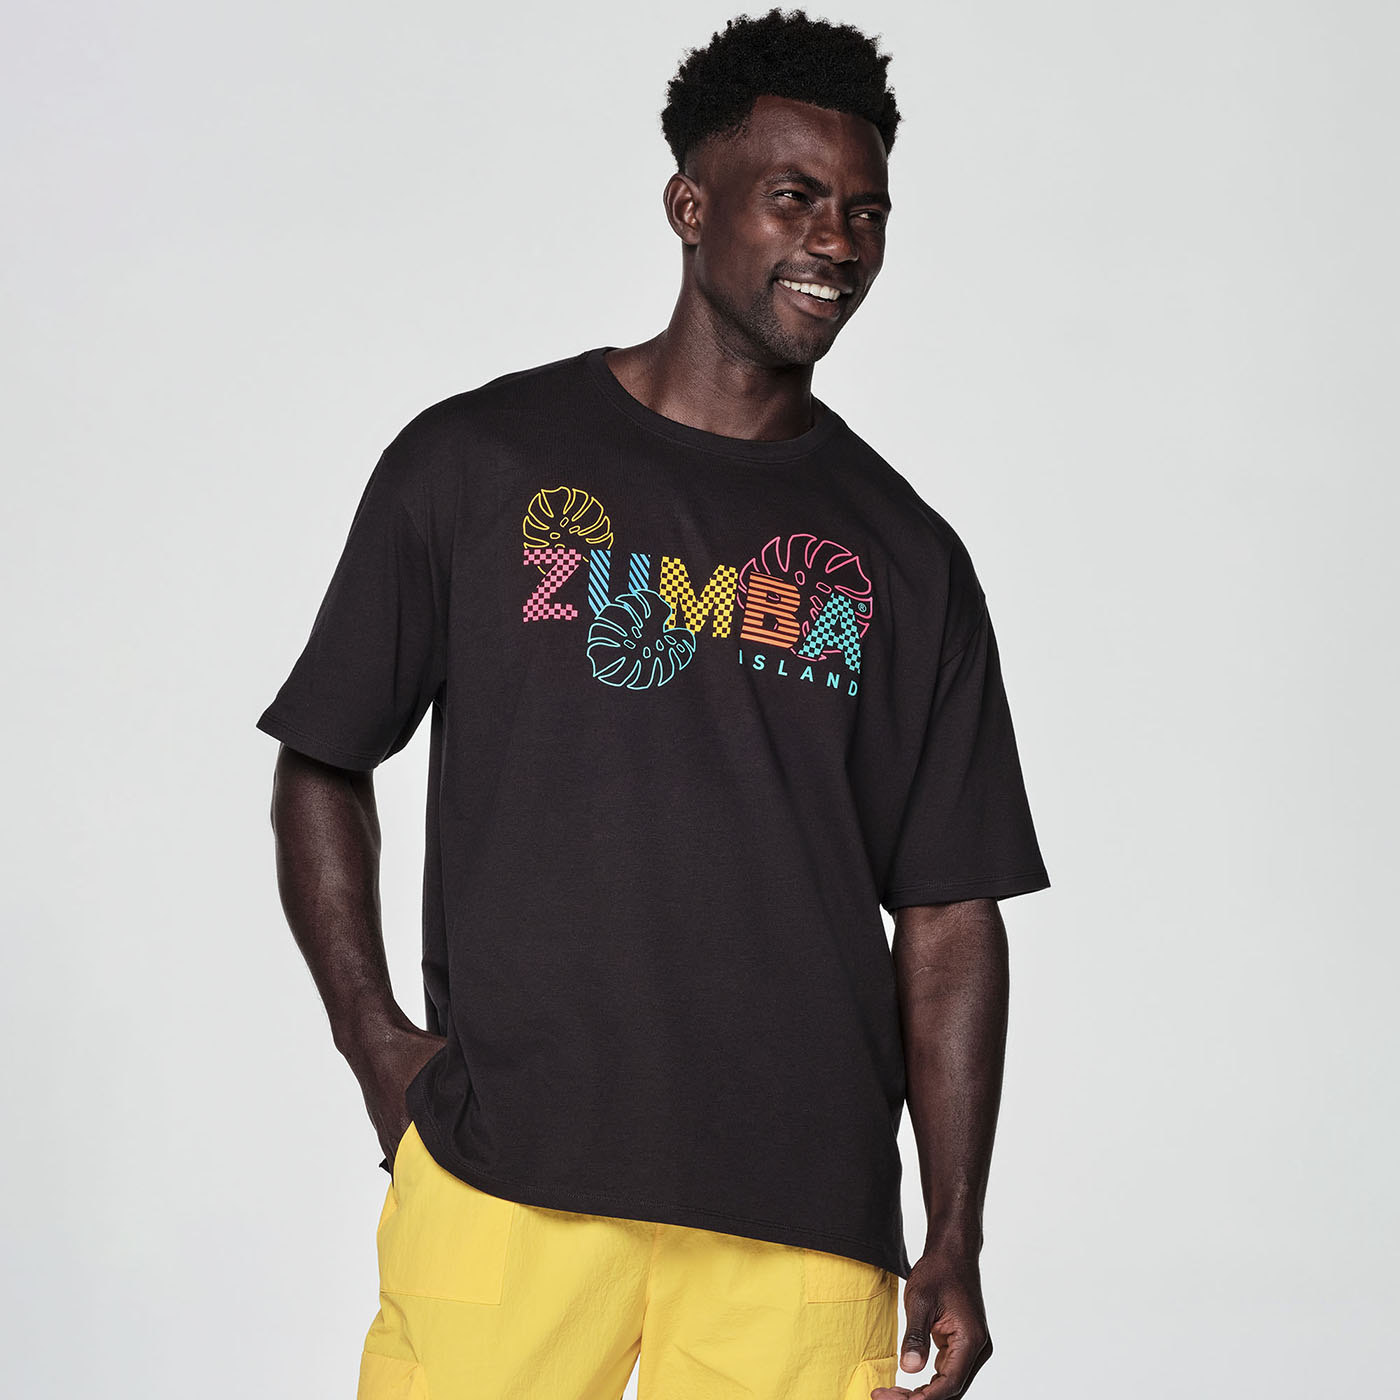 ZUMBA ズンバ 正規品 Tシャツ BLACK XSサイズ Sサイズ Mサイズ Lサイズ